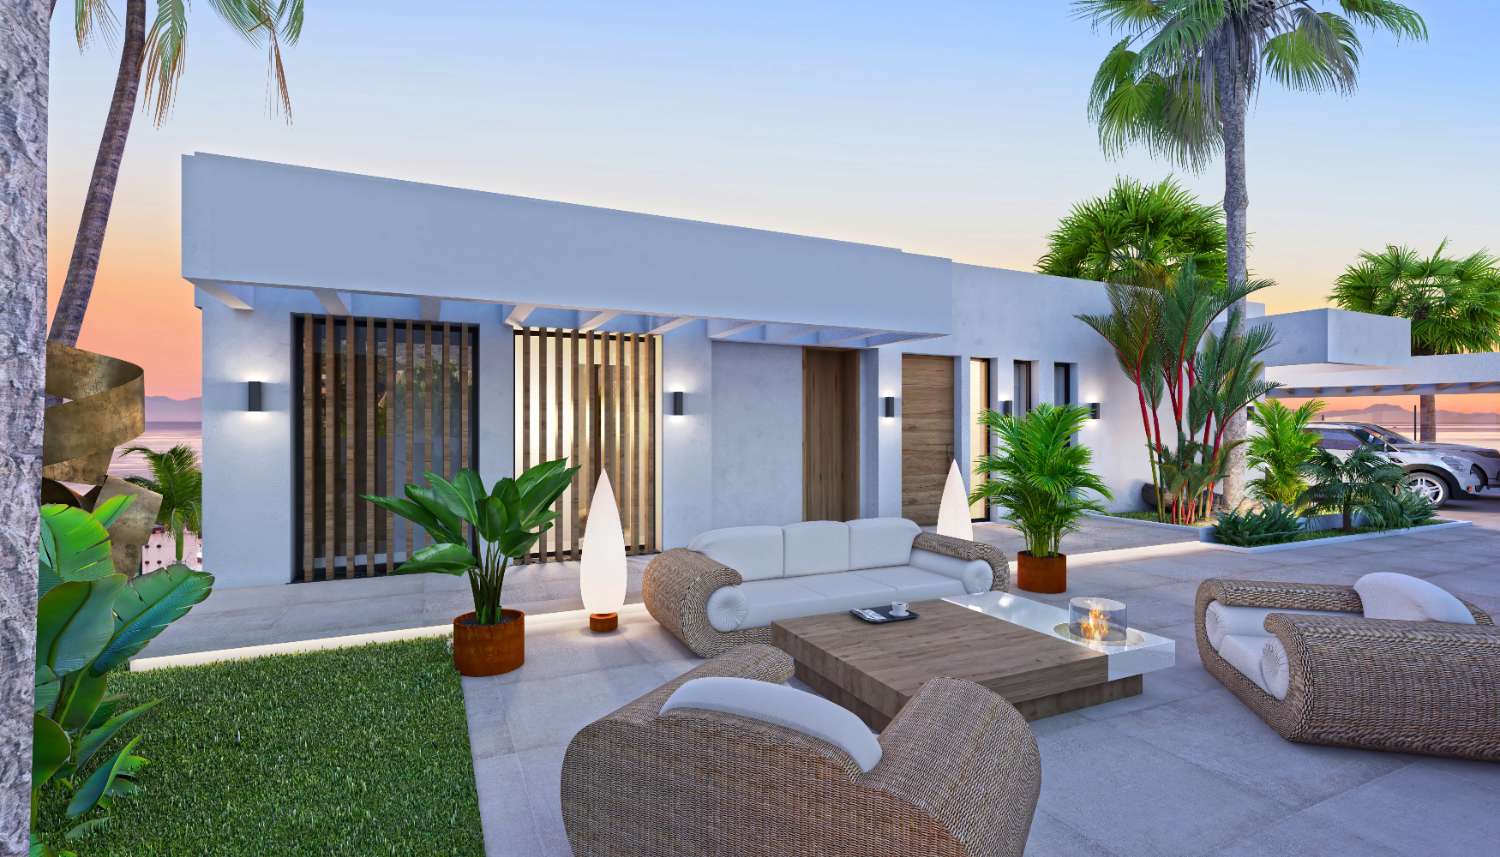 Luksus villa utvikling ligger mellom Marbella og Estepona